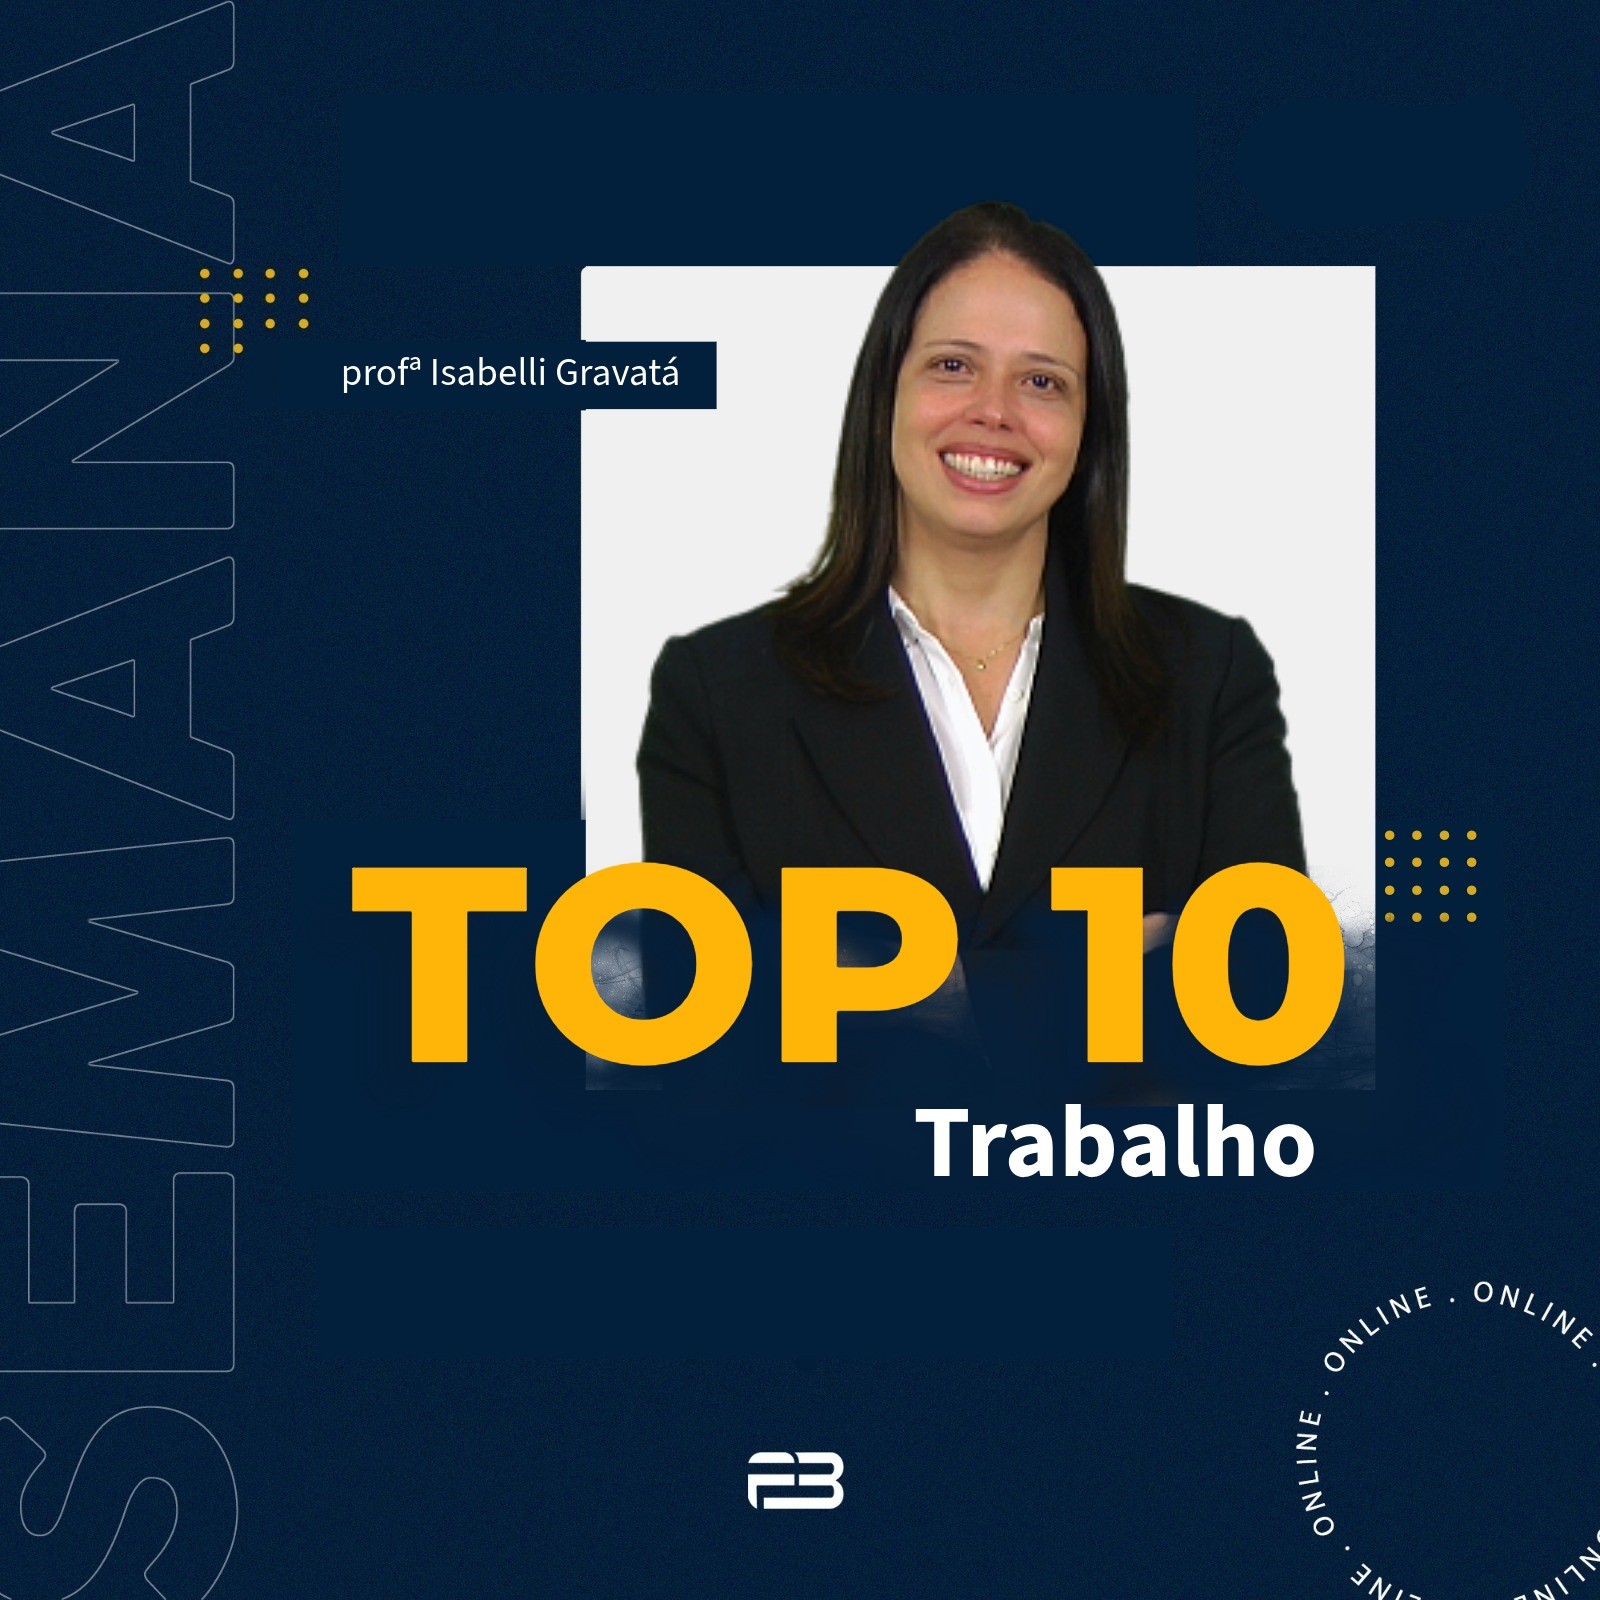 TOP 10 TRABALHO - OAB 1 FASE 40 EXAME